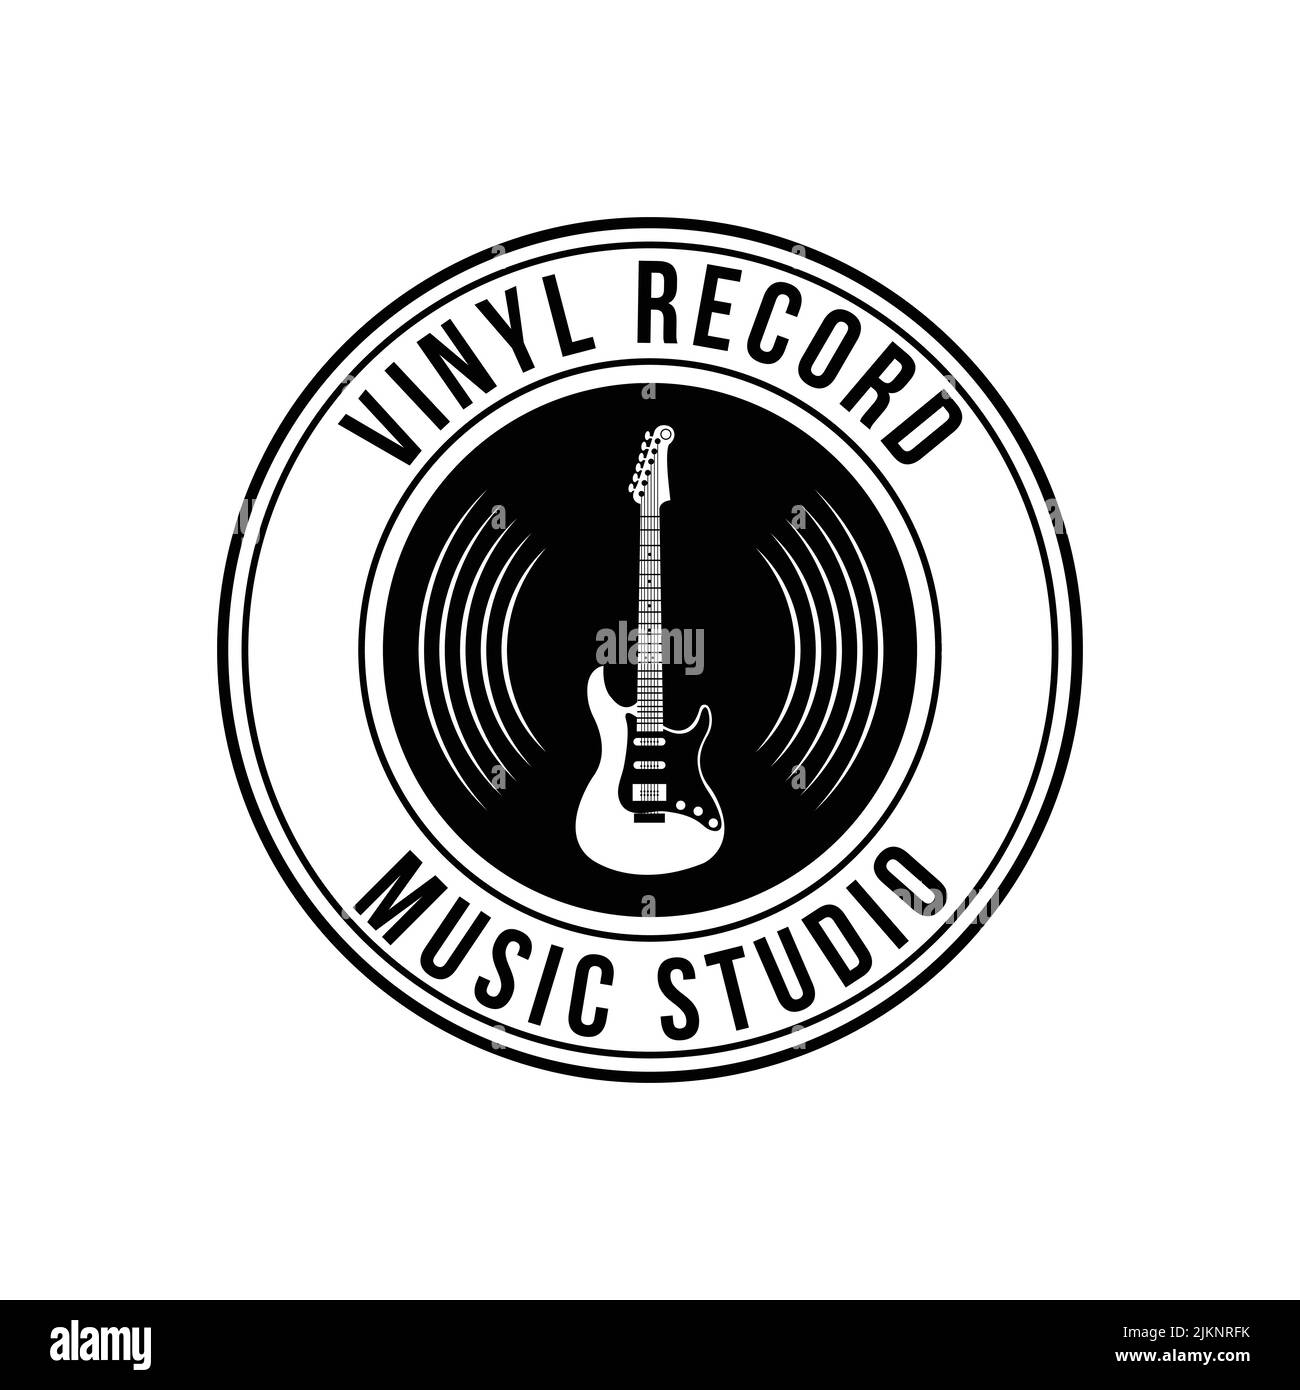 A minimalist round logo design of a vinyl record music studio on white background Stock Vector